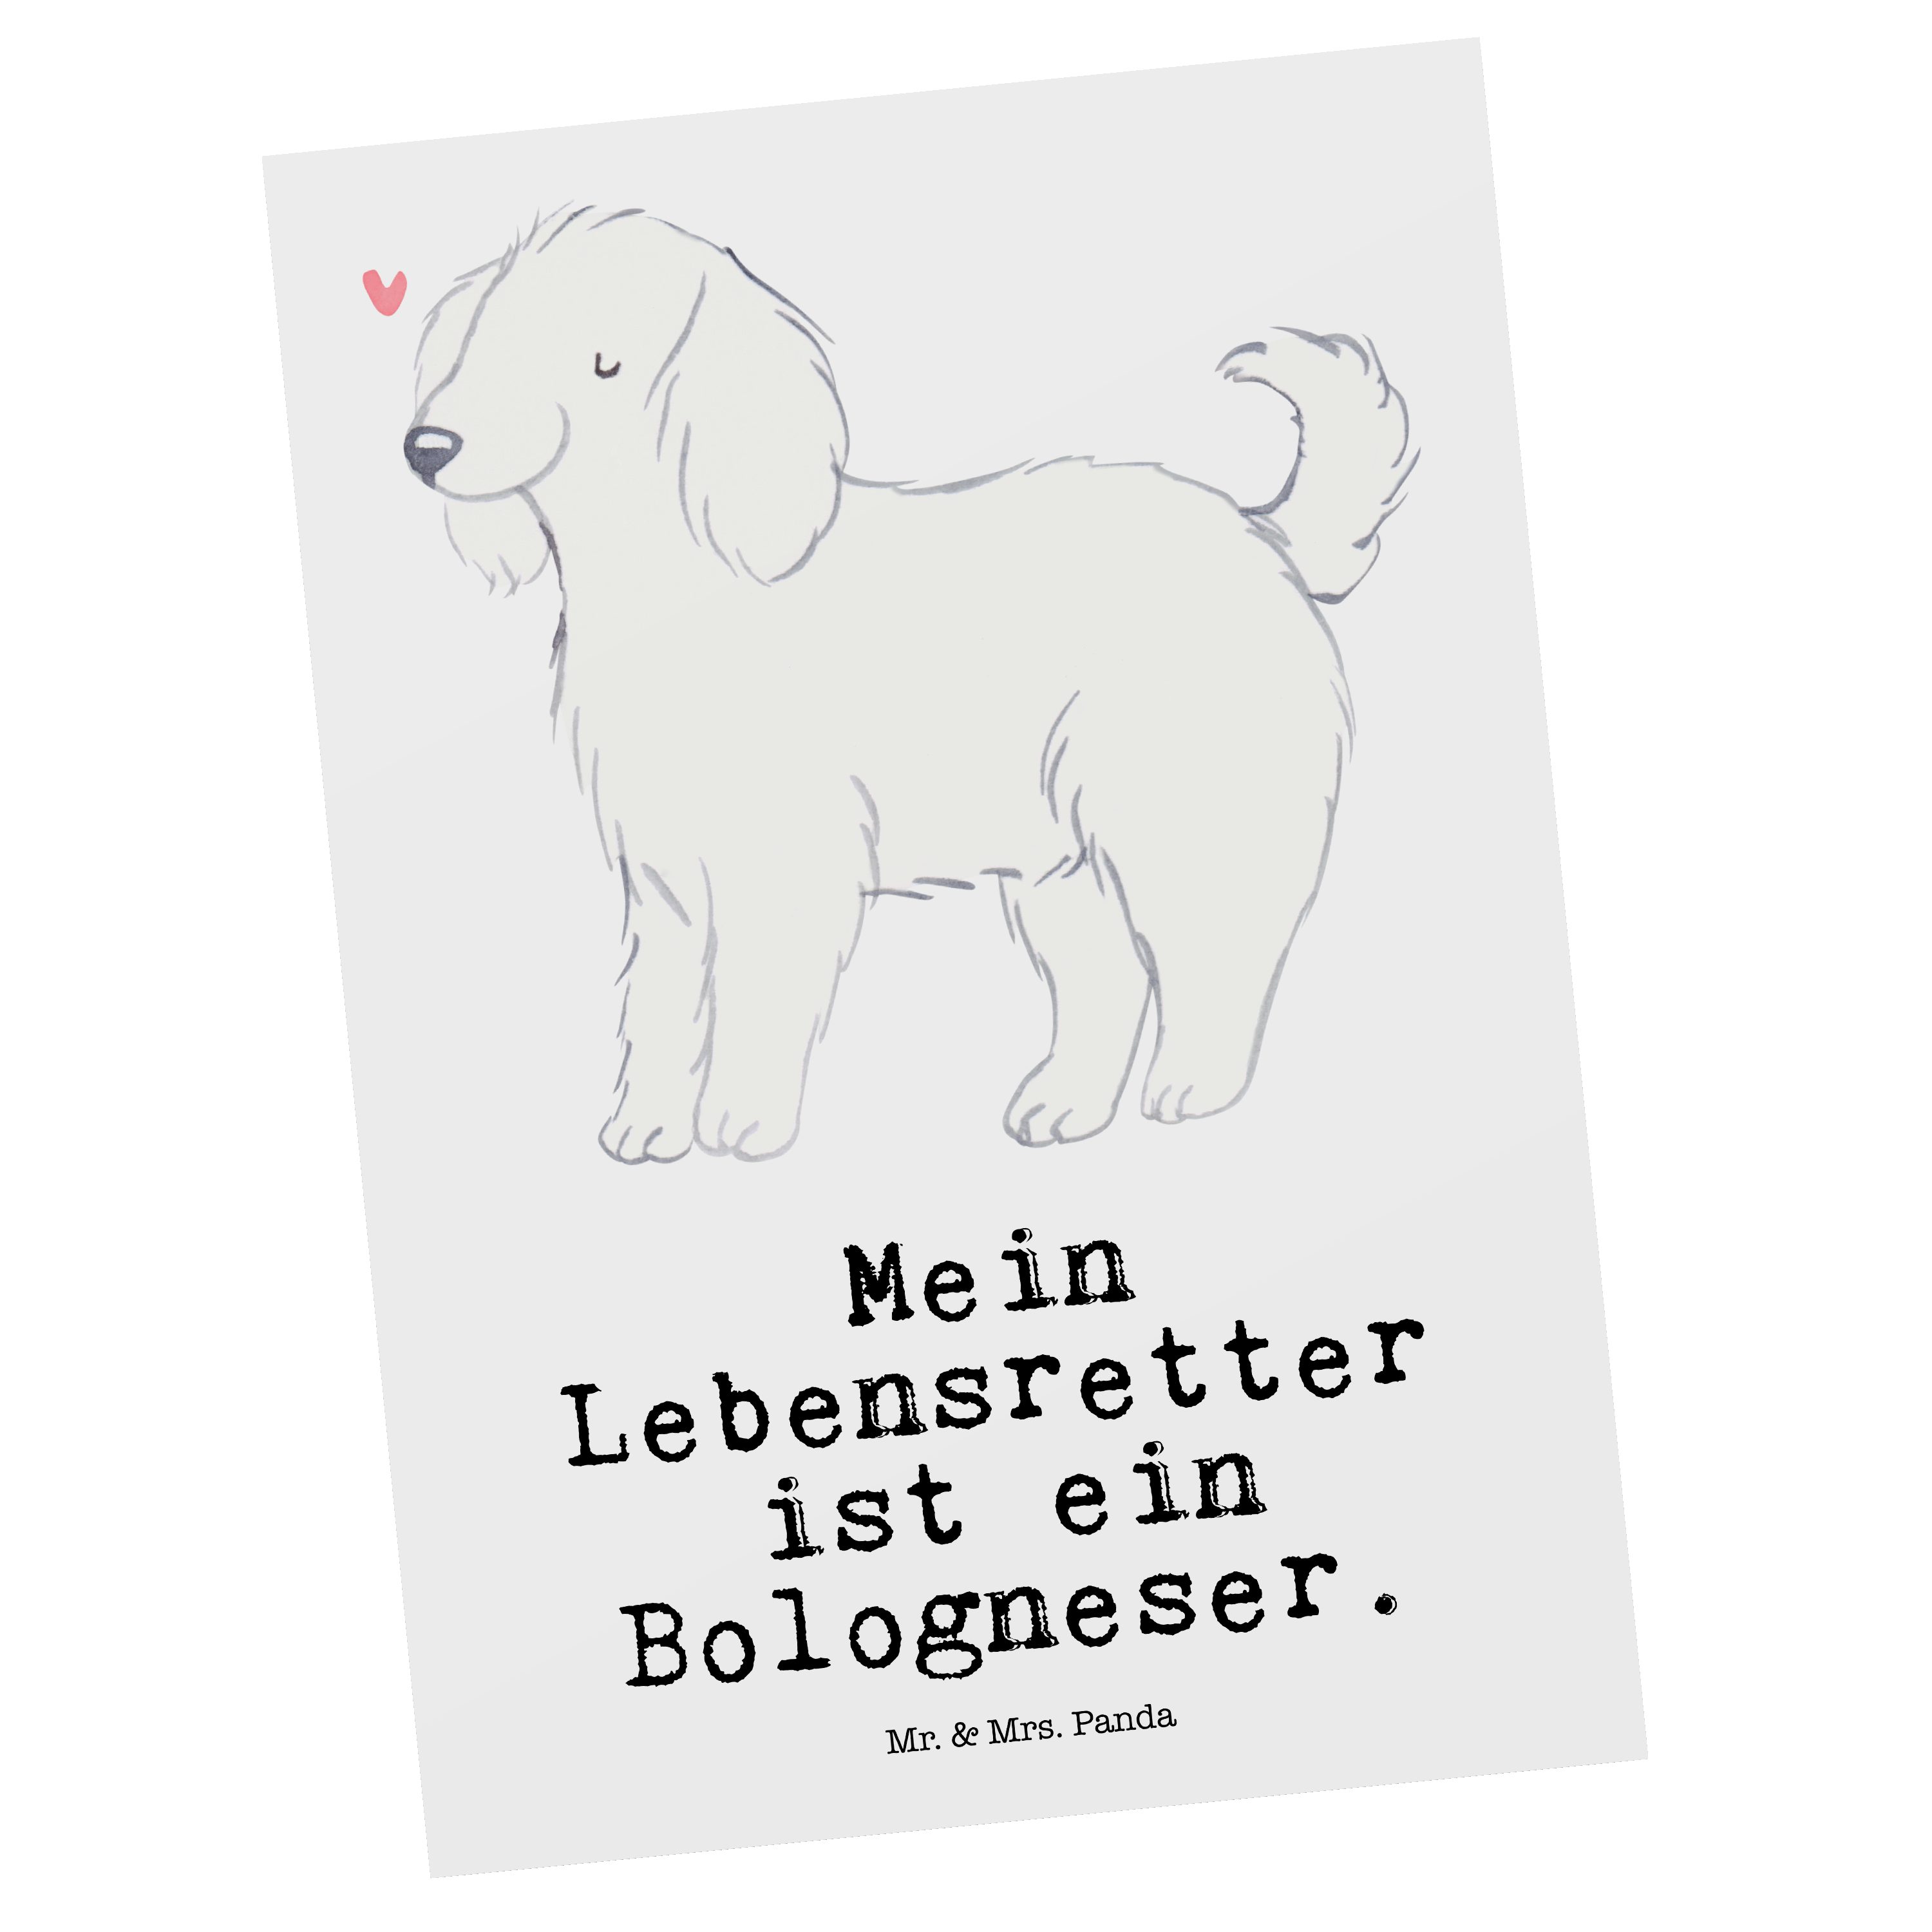 Mr. & Mrs. Panda Postkarte Bologneser Lebensretter - Weiß - Geschenk, Grußkarte, Hunderasse, Dan